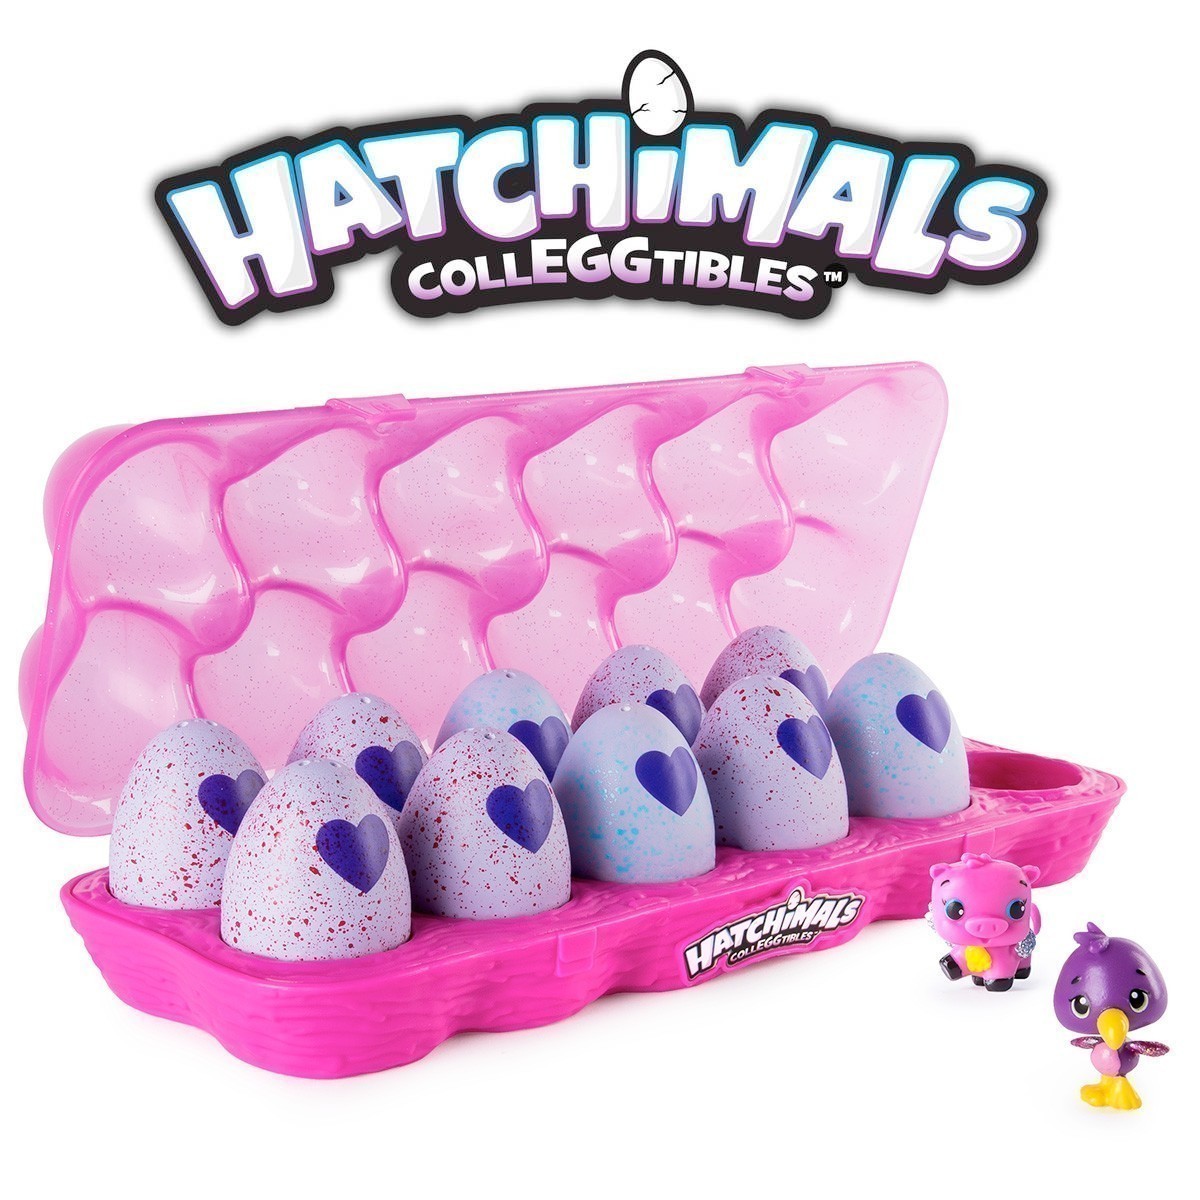 Hatchimals - Colleggtibles 12-Pack Egg Carton - Season 1